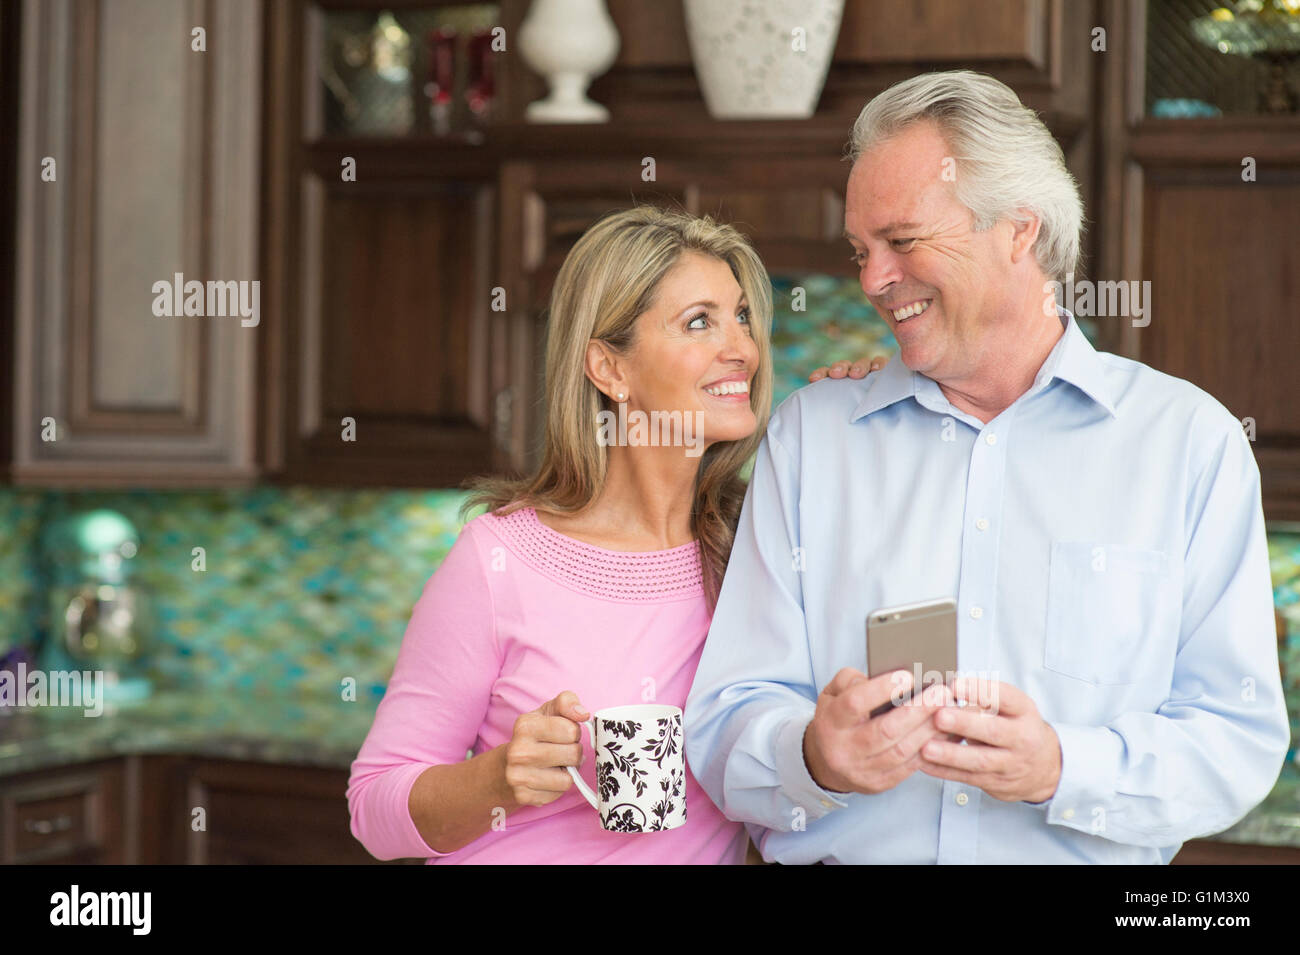 Caucasian couple smiling in kitchen Stock Photo